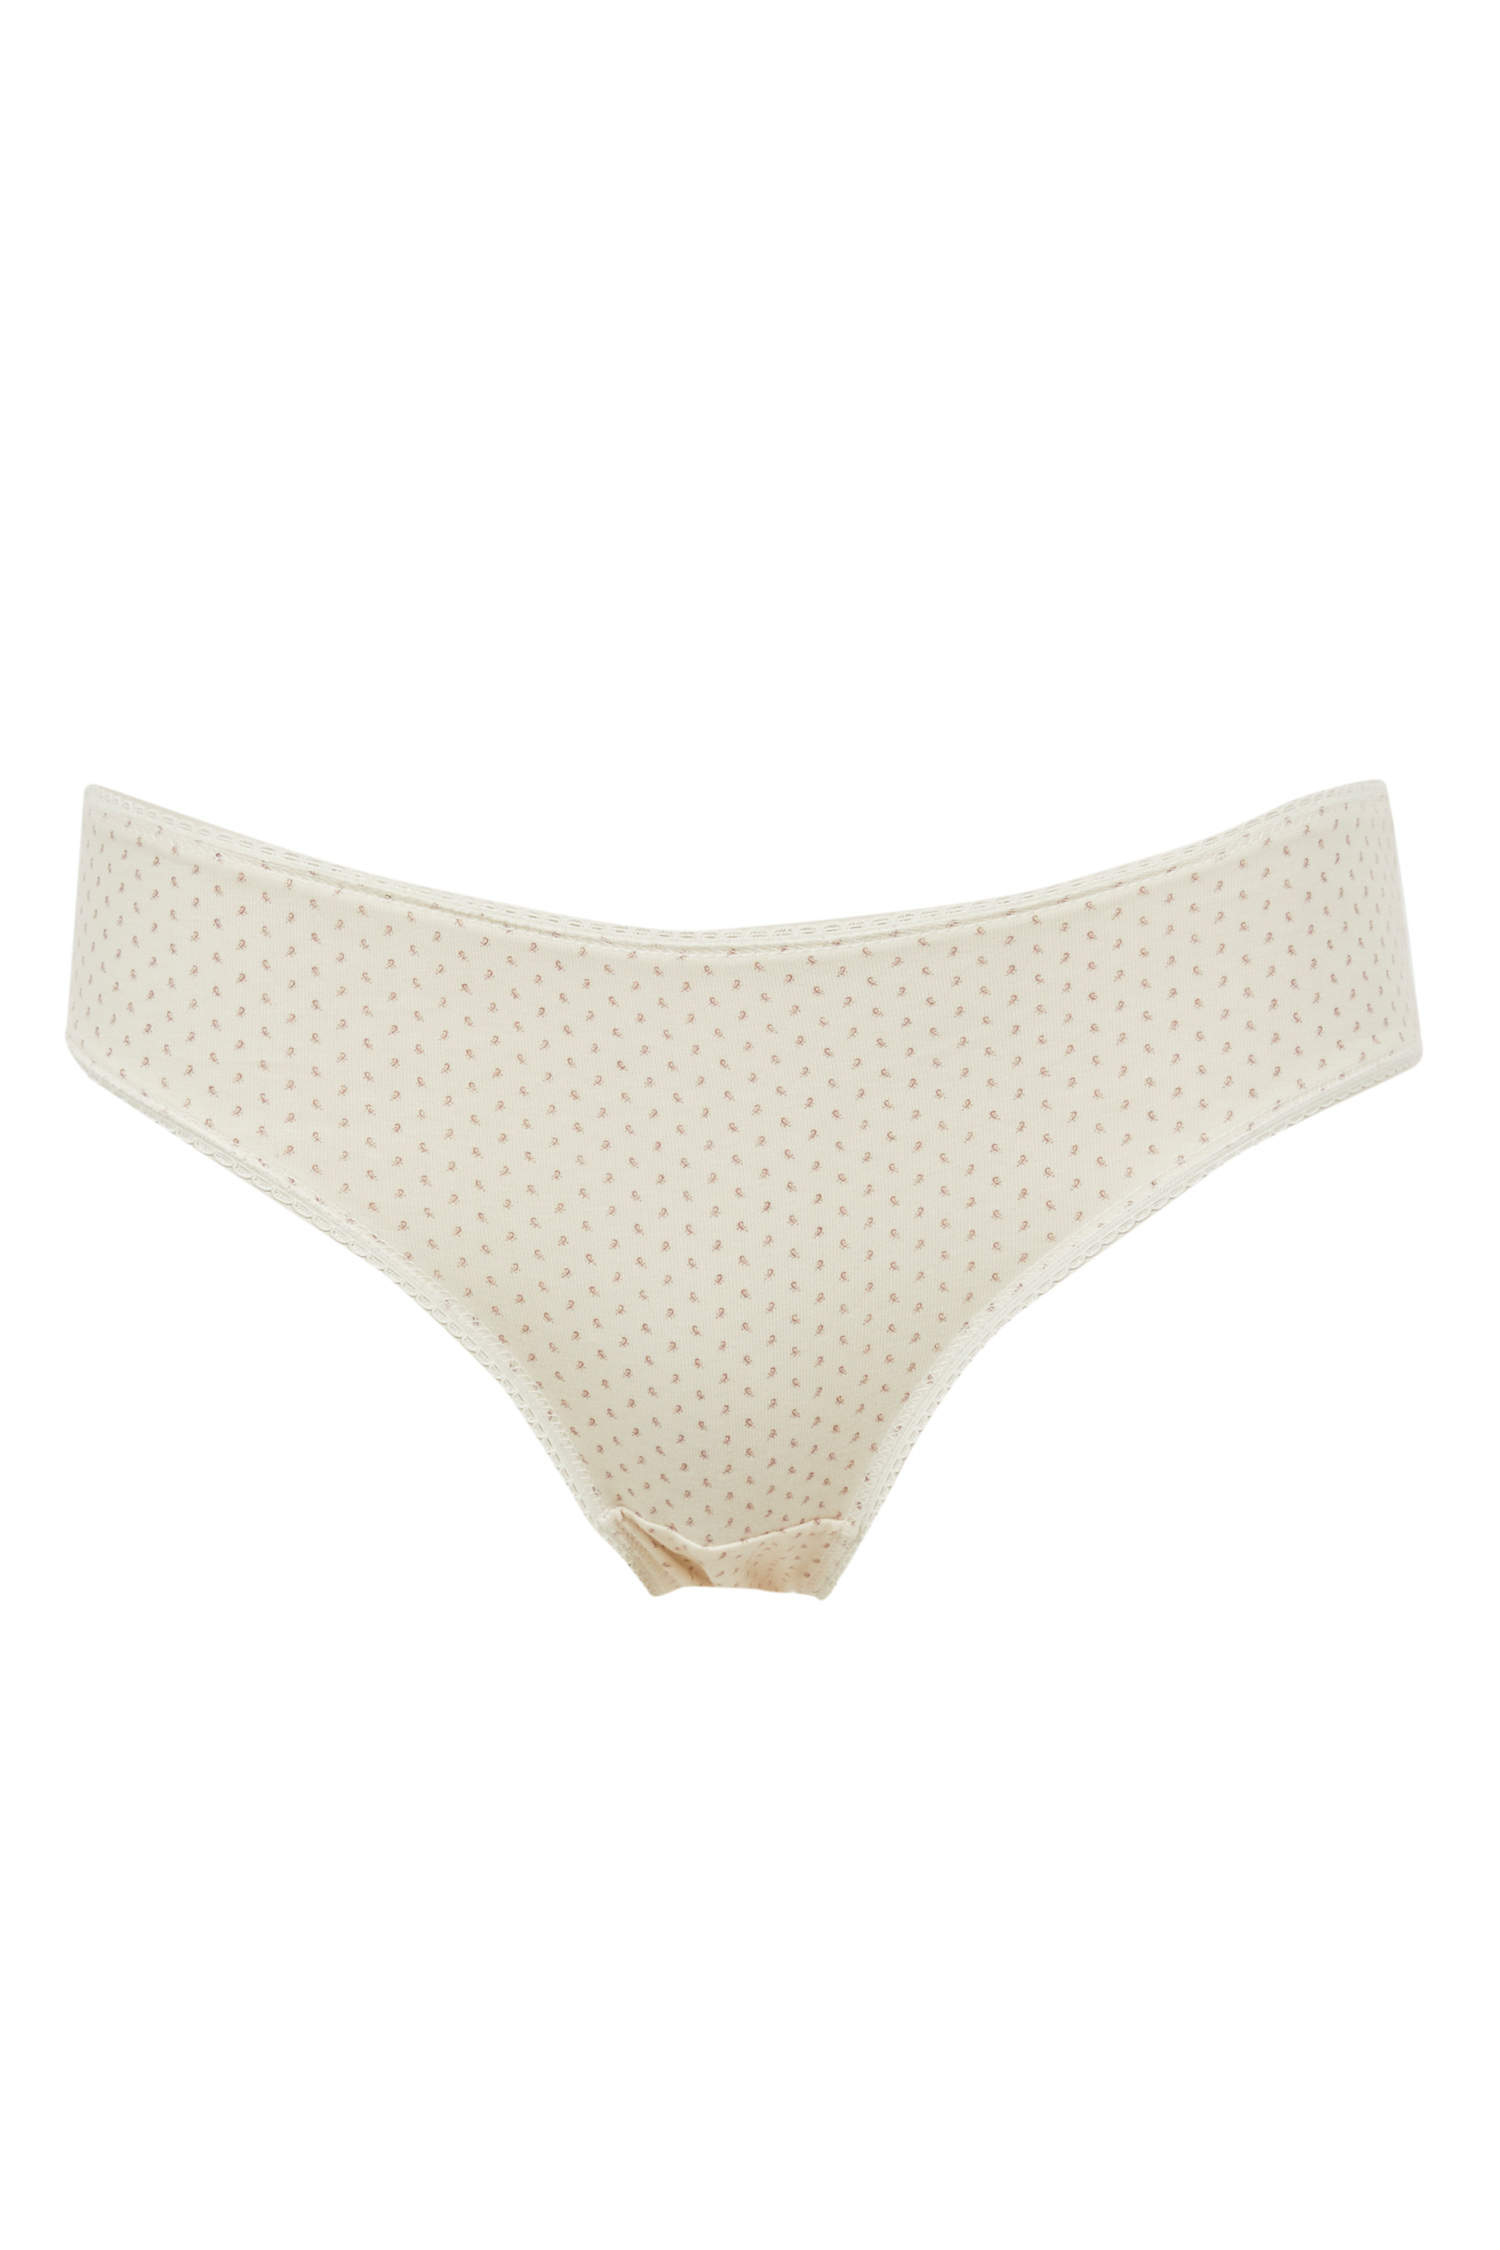 White WOMAN Basic Patterned Cotton Bikini Briefs (5 Pack) 1980741